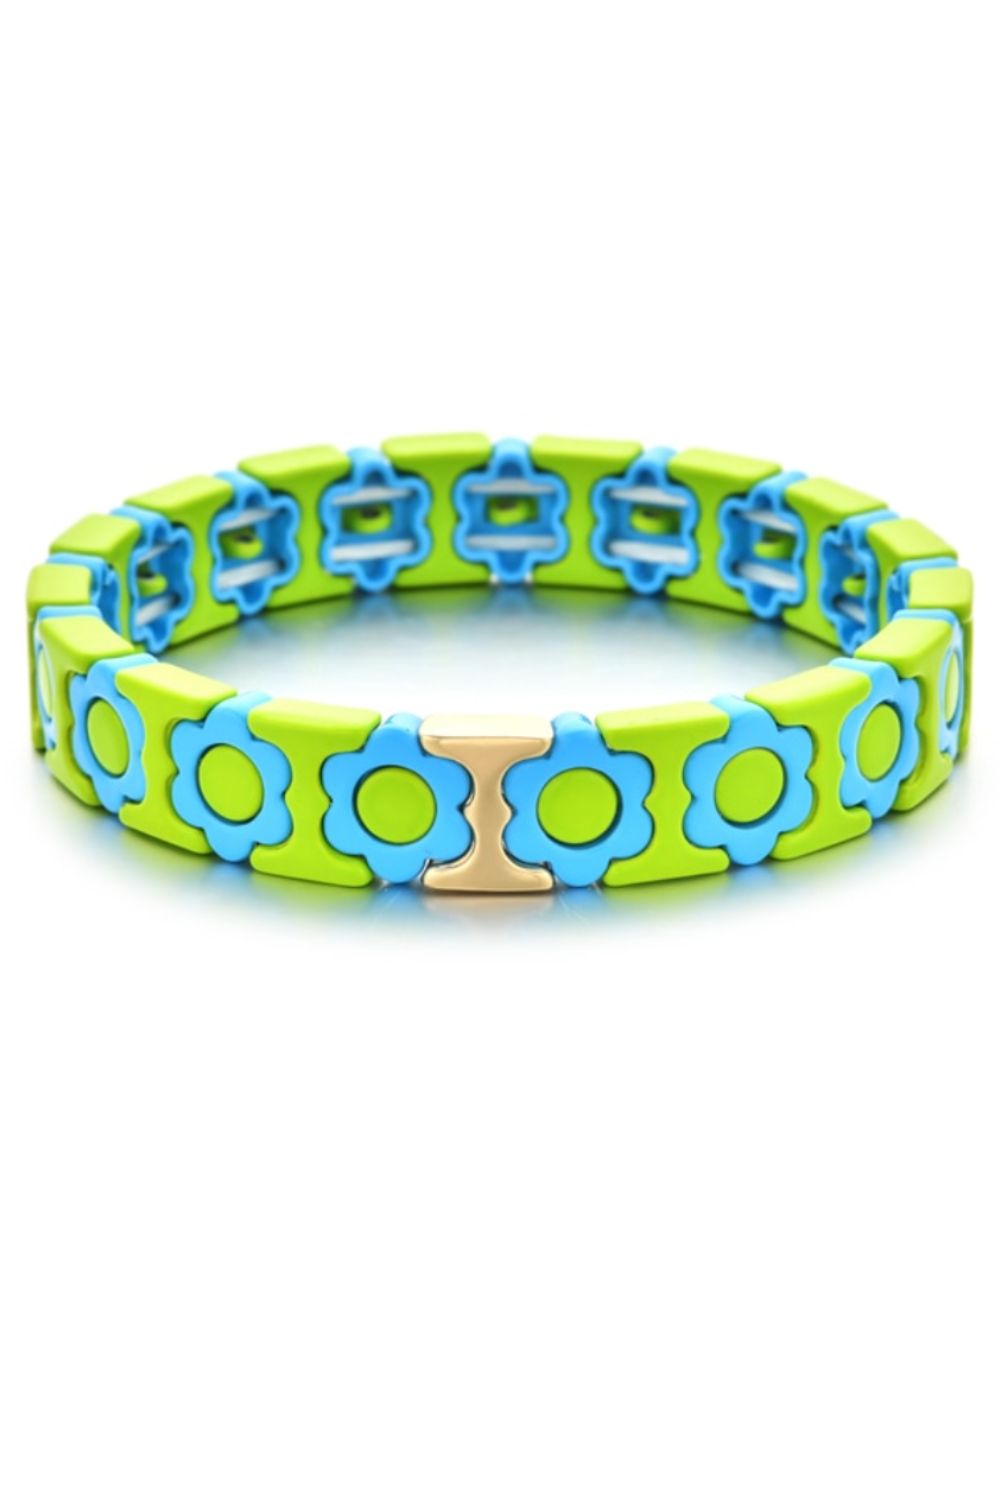 Daisy chain bracelet - lime/aqua